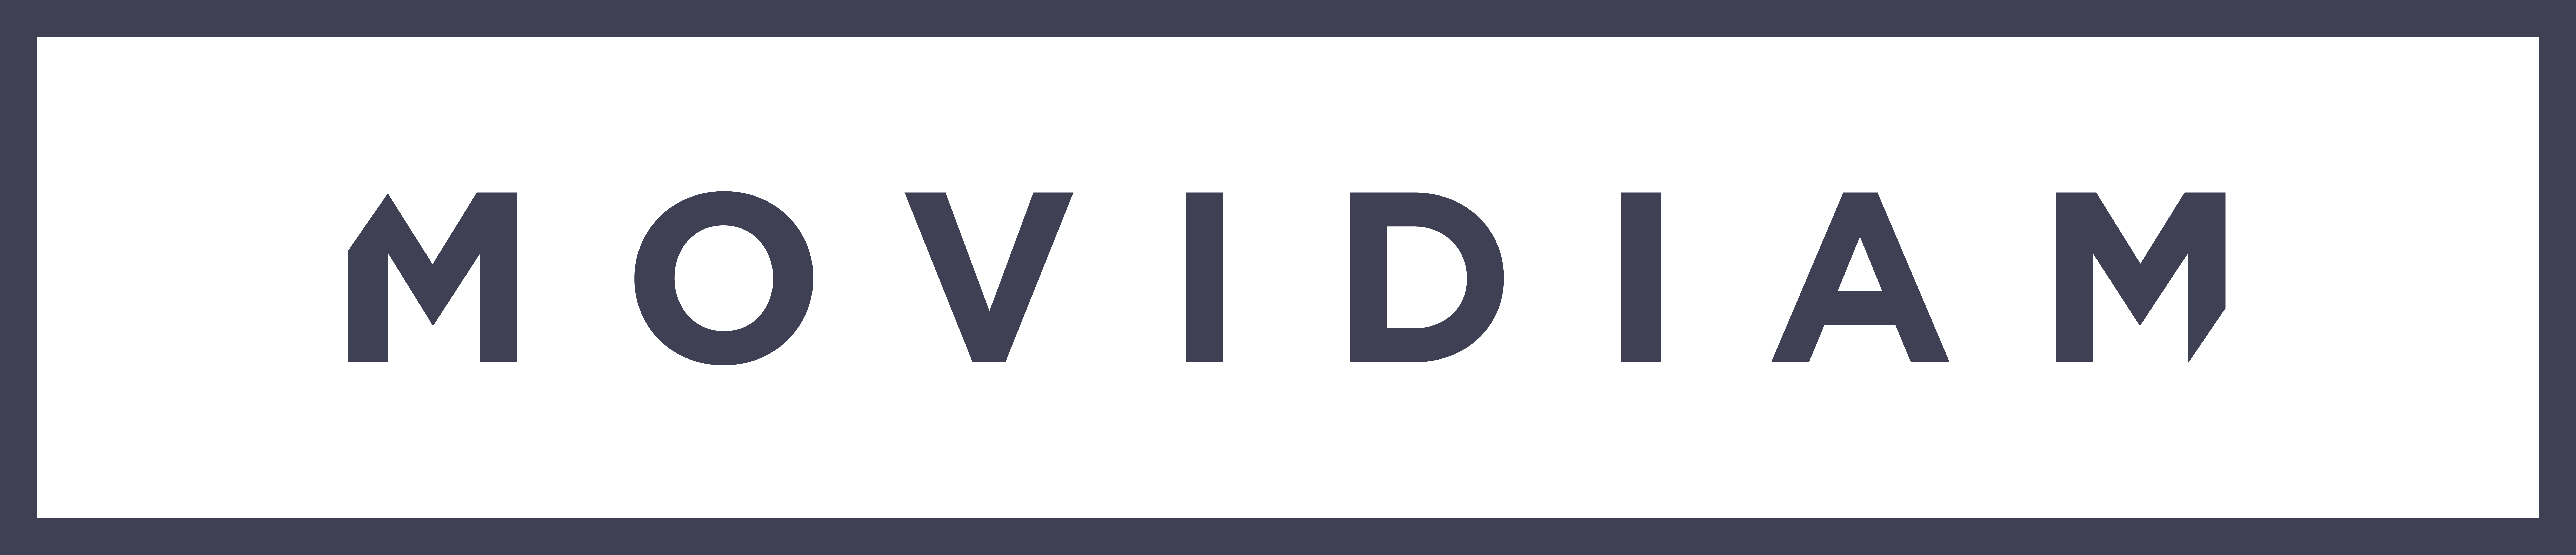 Movidiam Logo